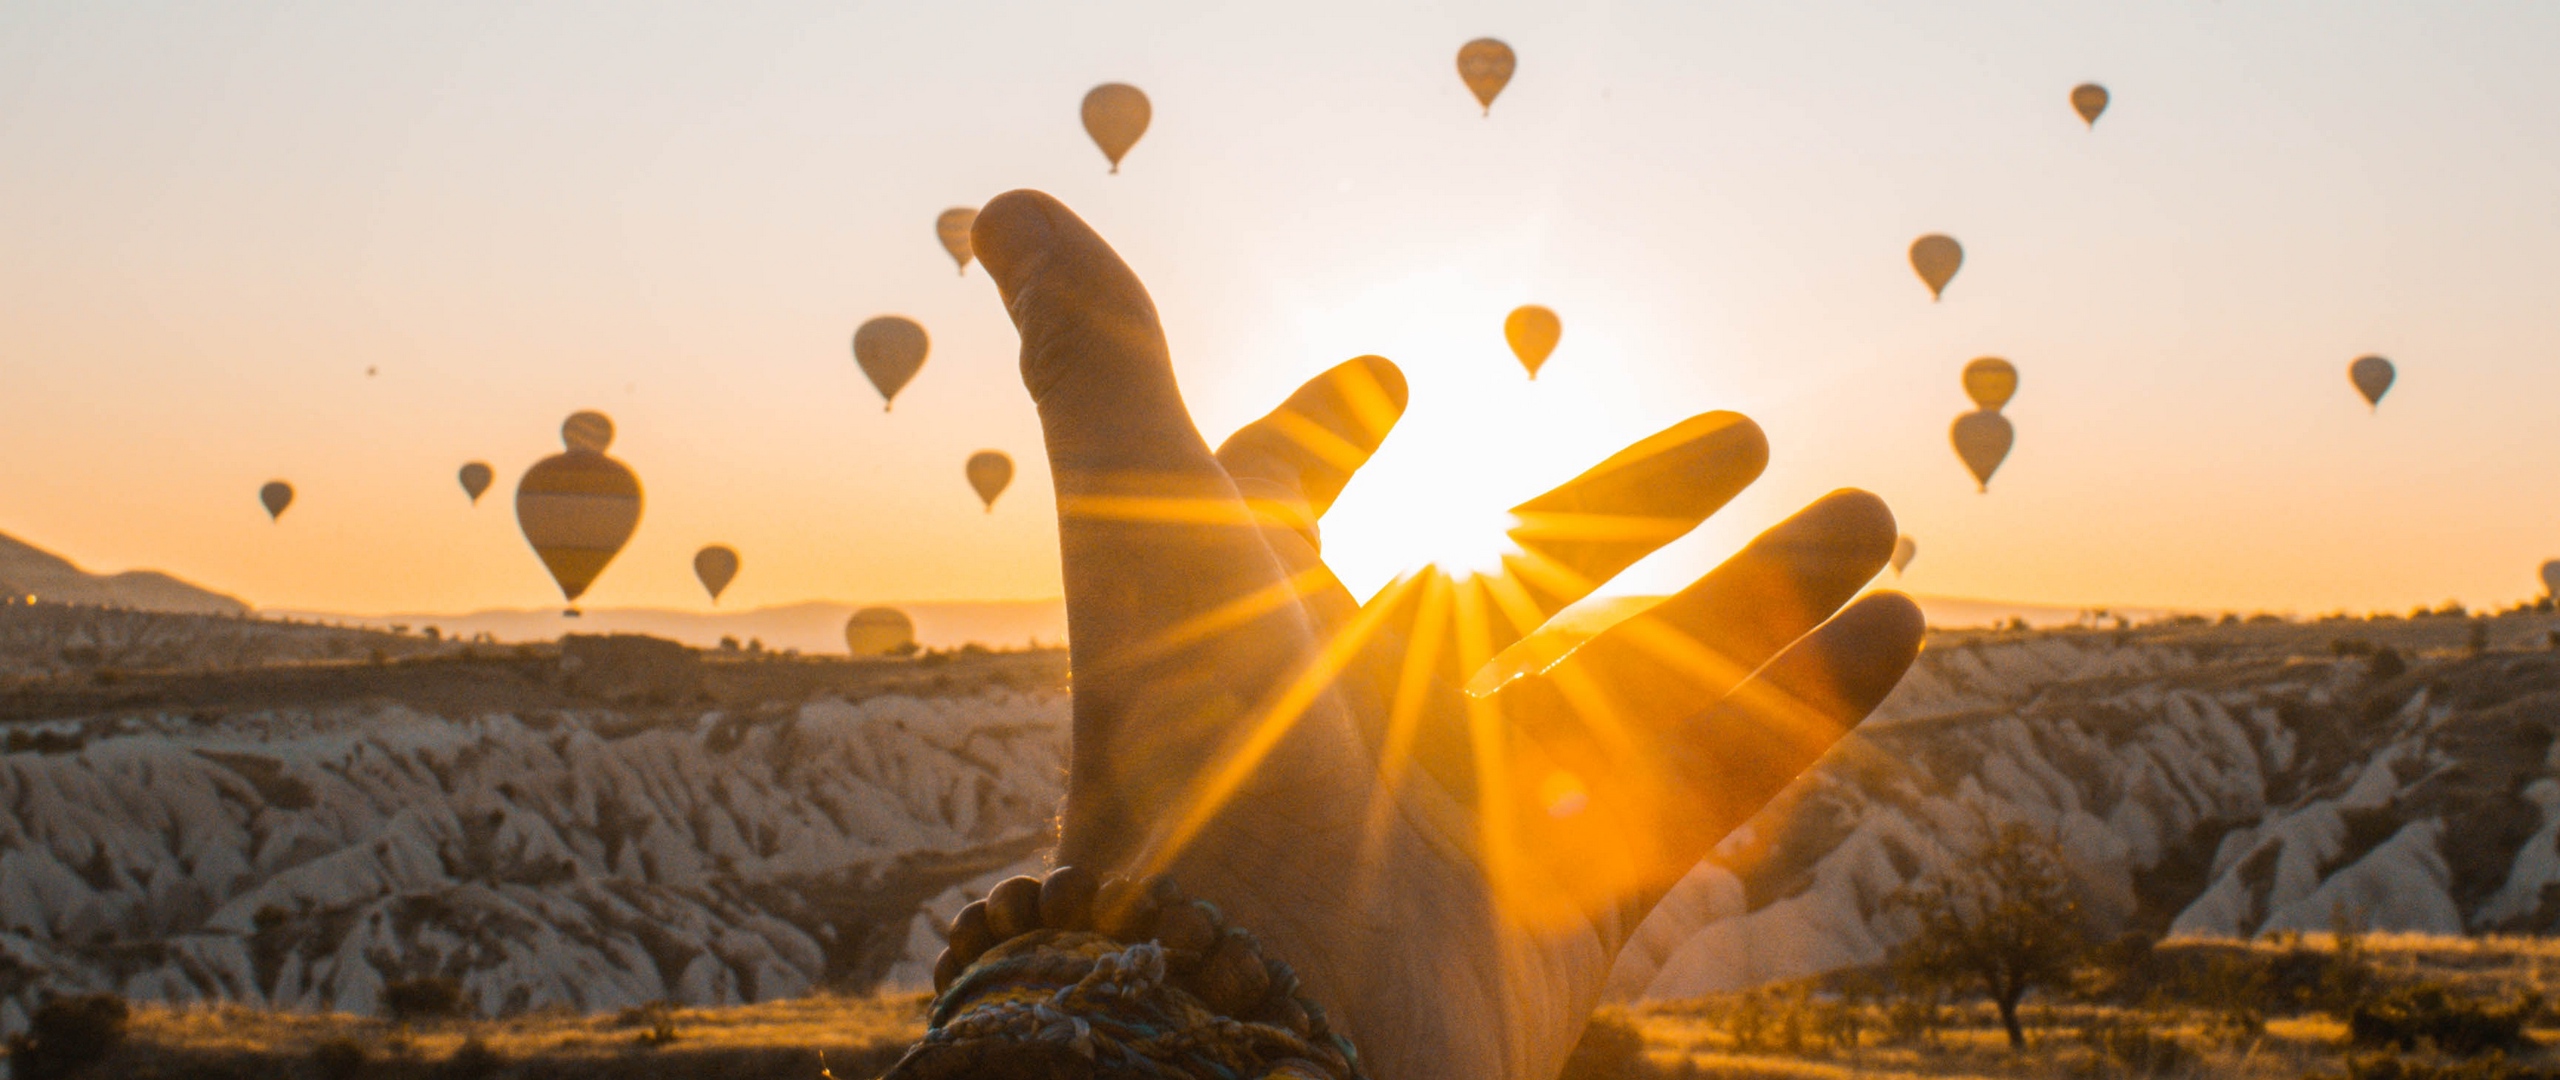 Wallpaper Hand, Sun, Air Balloons, Mountains, Sunrise - Hot Air Balloon Background - HD Wallpaper 